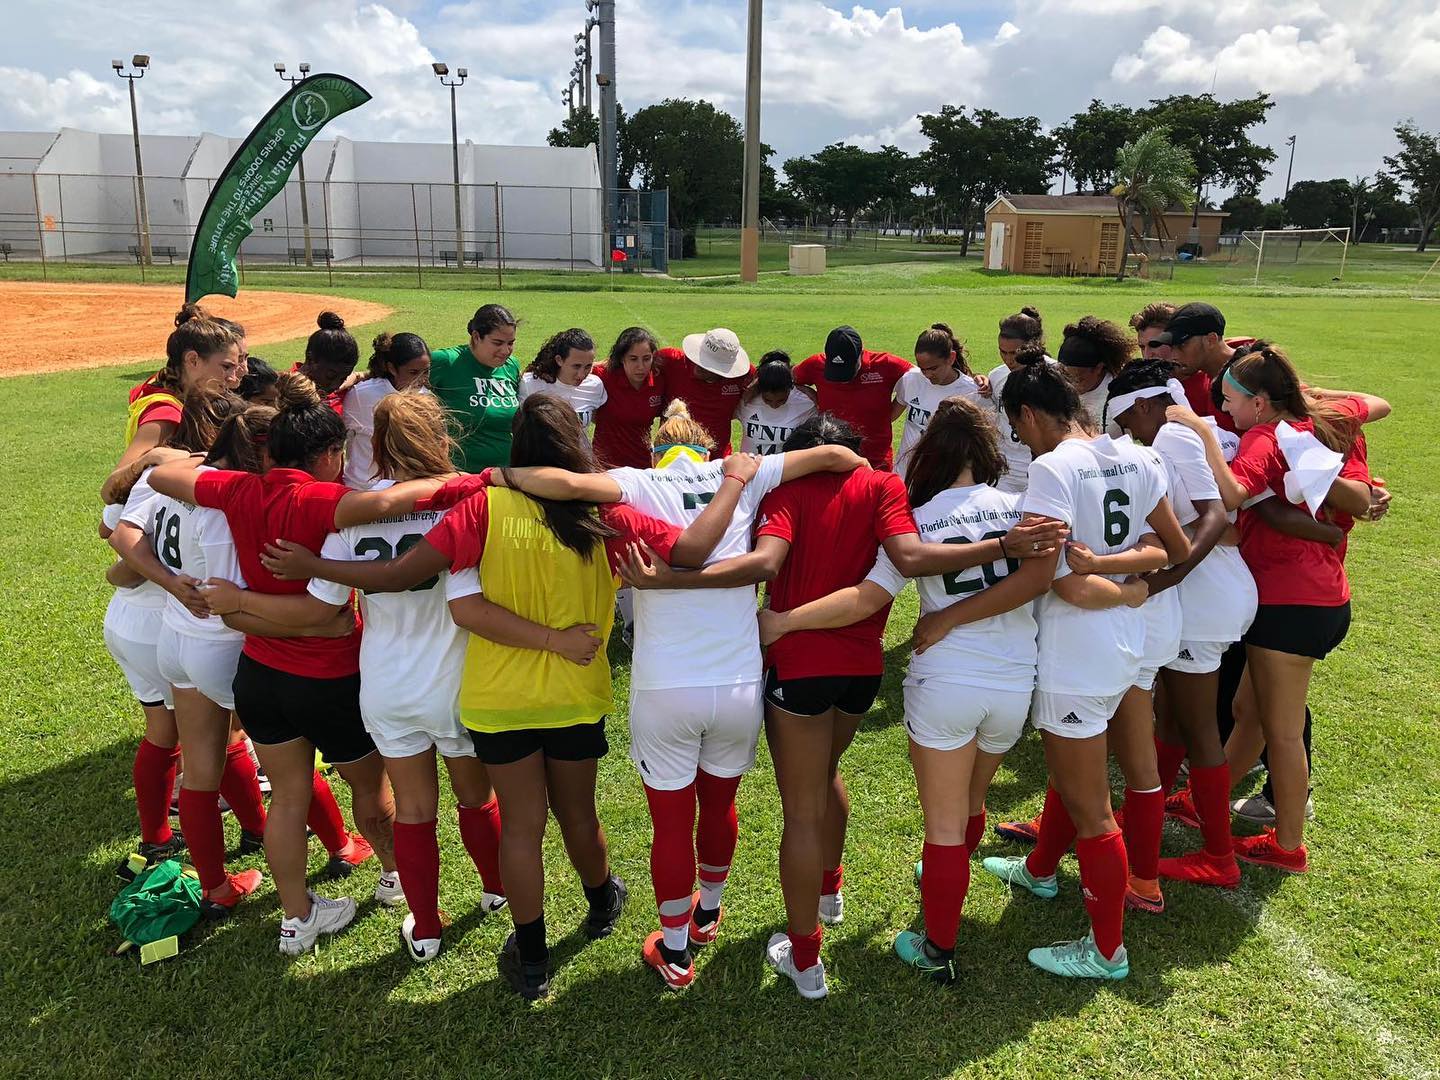 FNU Women's soccer team huddling up in a circle